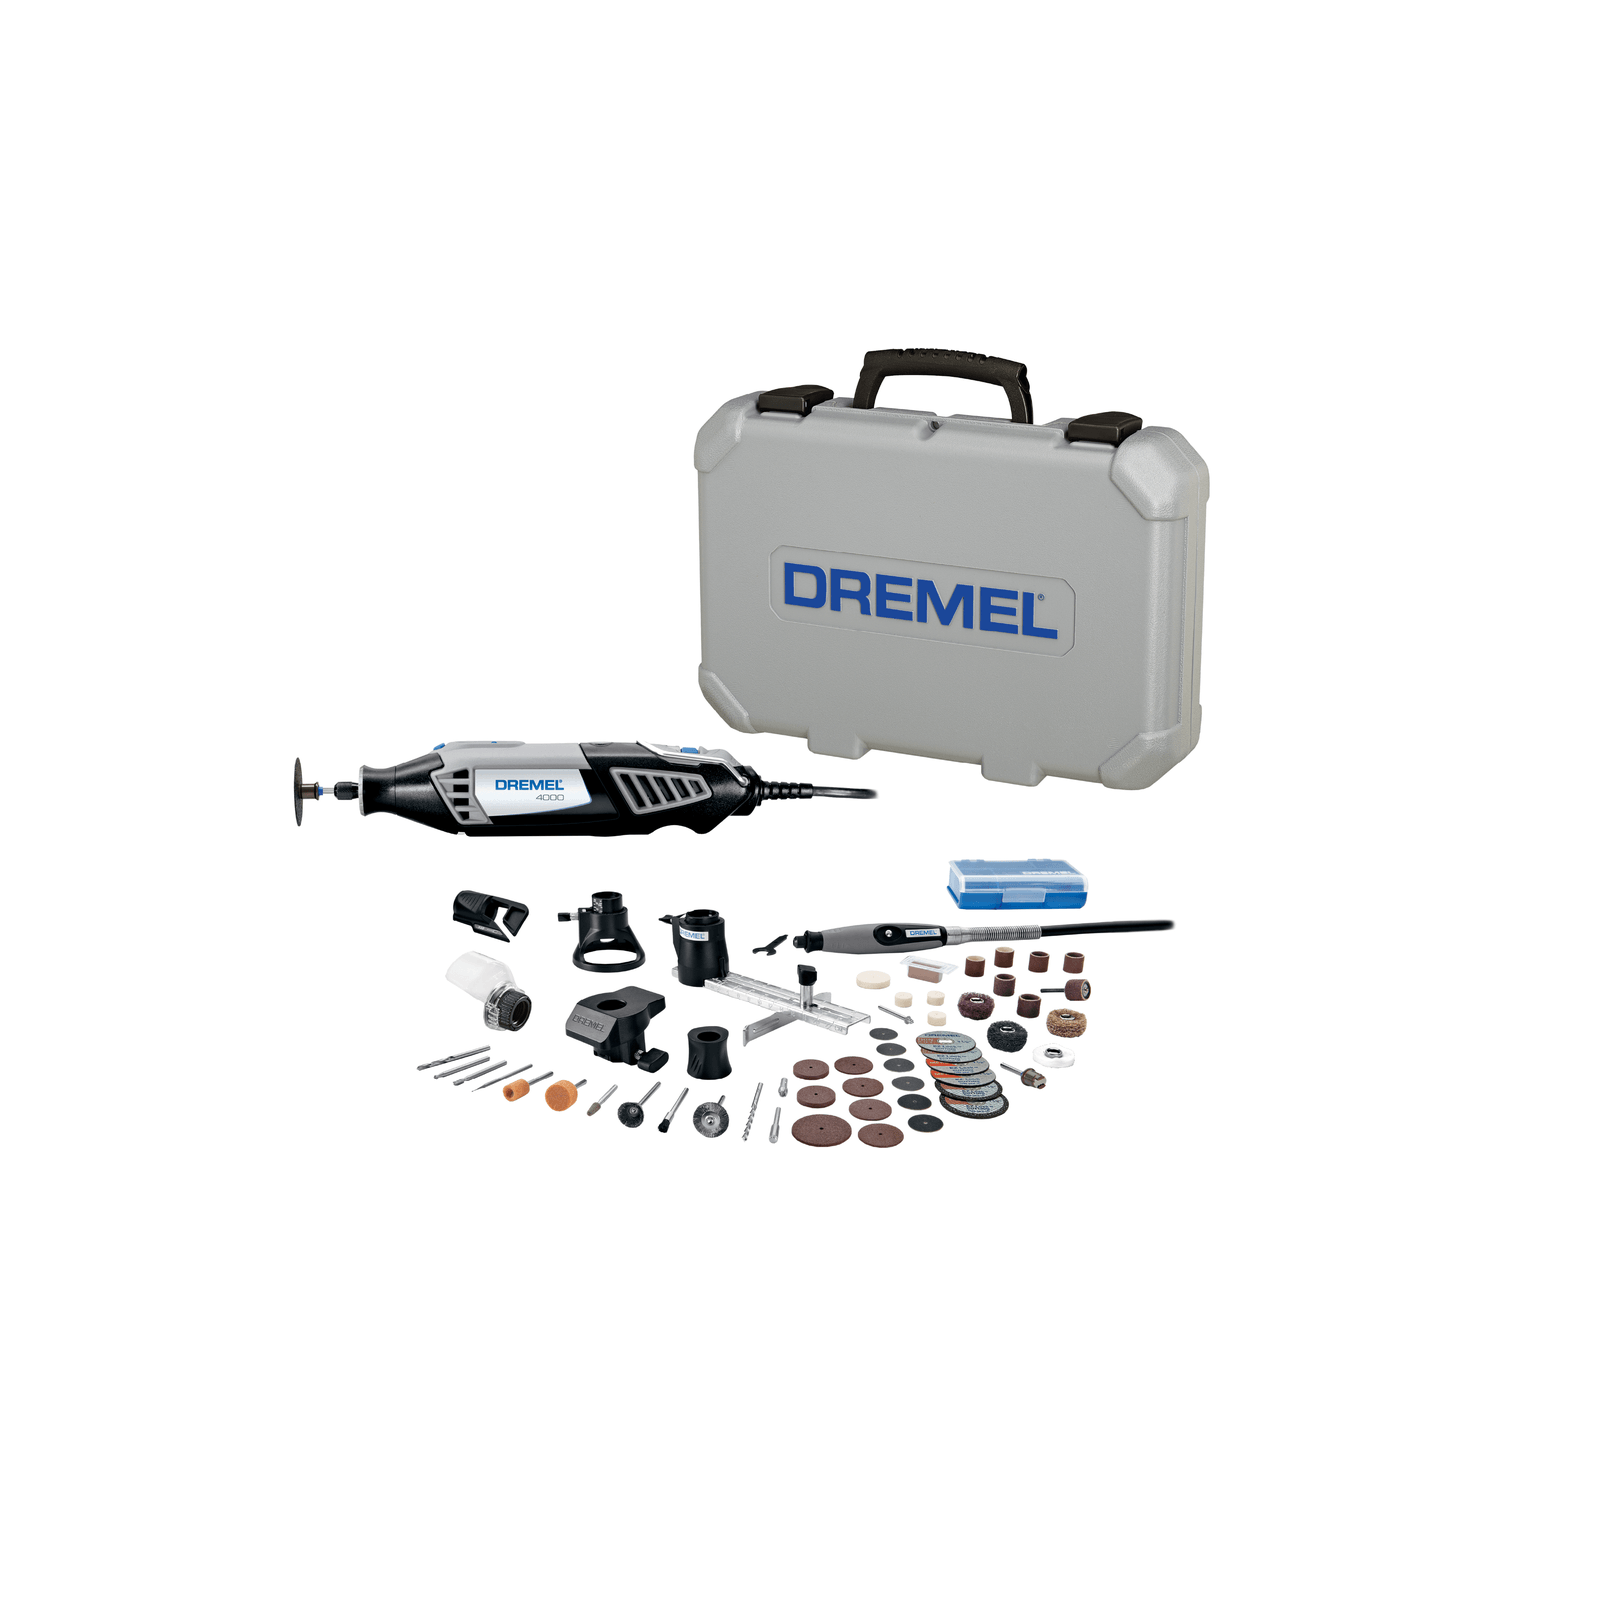 Dremel 4000 Series High Performance Rotary Tool Kit w/ 50 Accessories, 120V  (Dremel 4000-6/50)